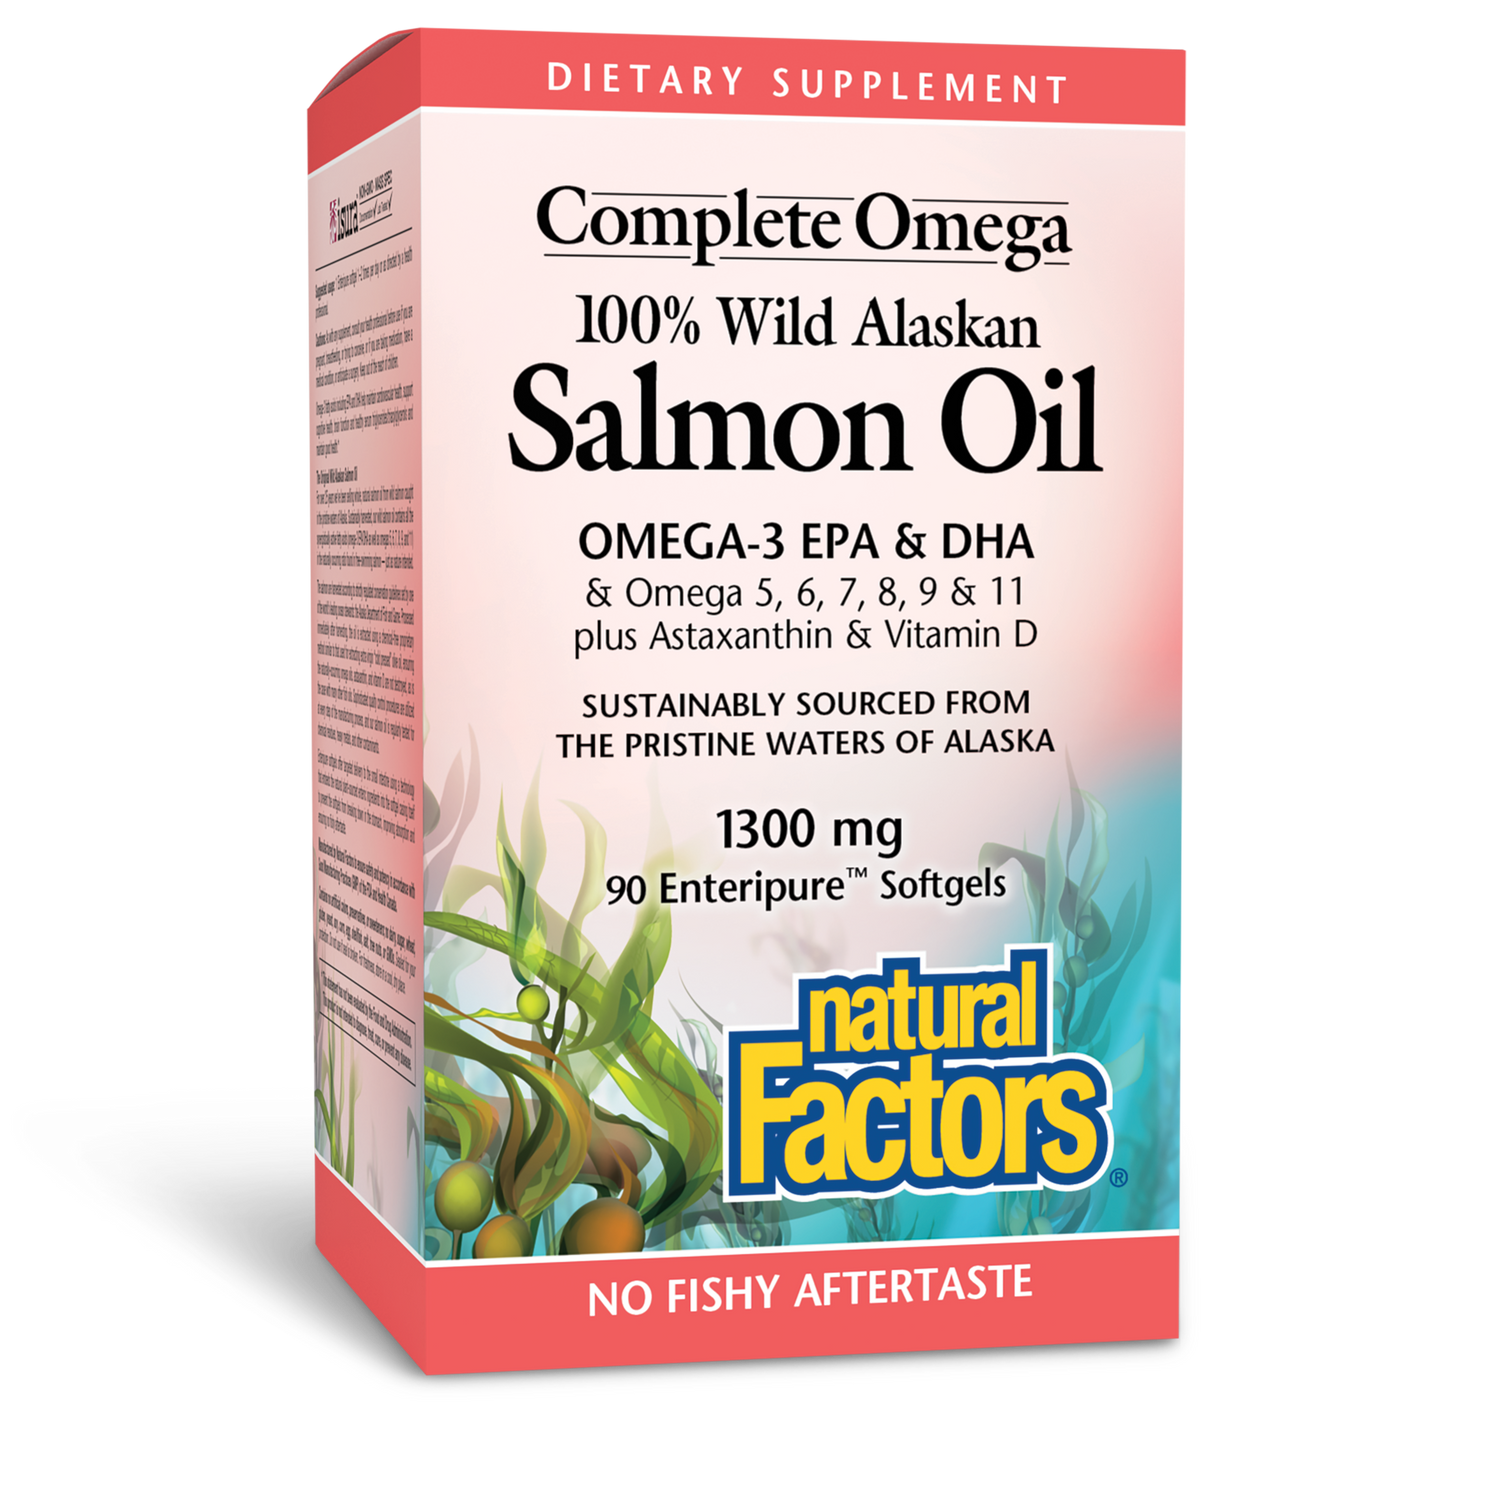 Complete Omega 100% Wild Alaskan Salmon Oil|variant|hi-res|2265U